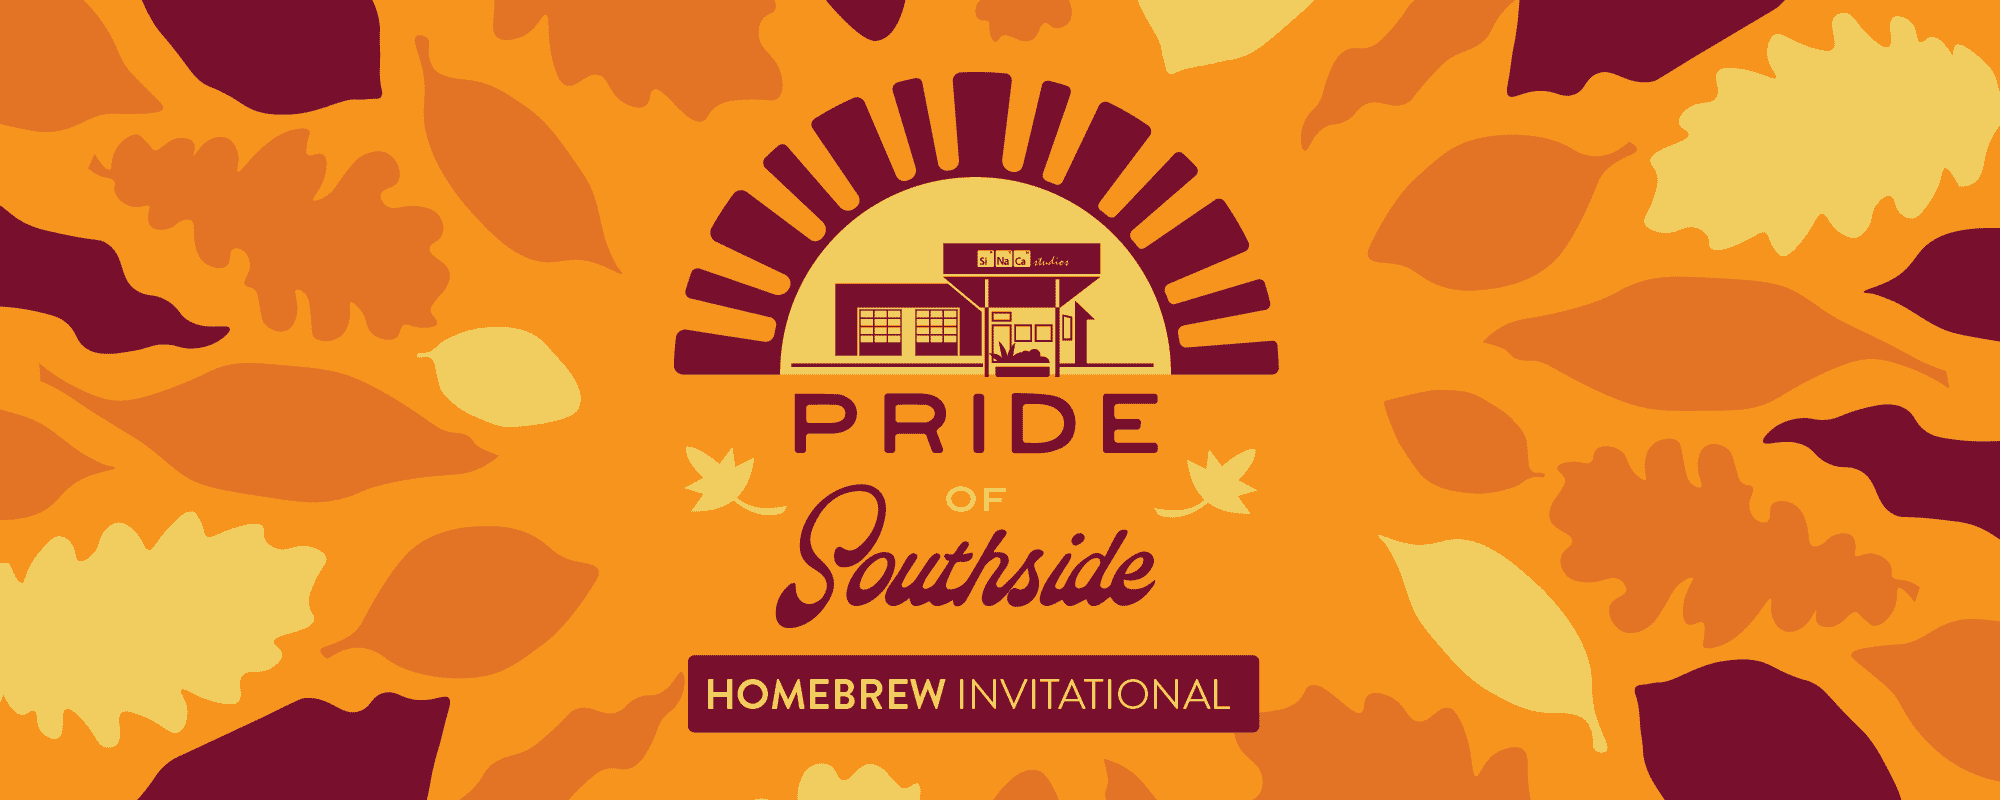 Pride of Southside Homebrew Invitational Banner